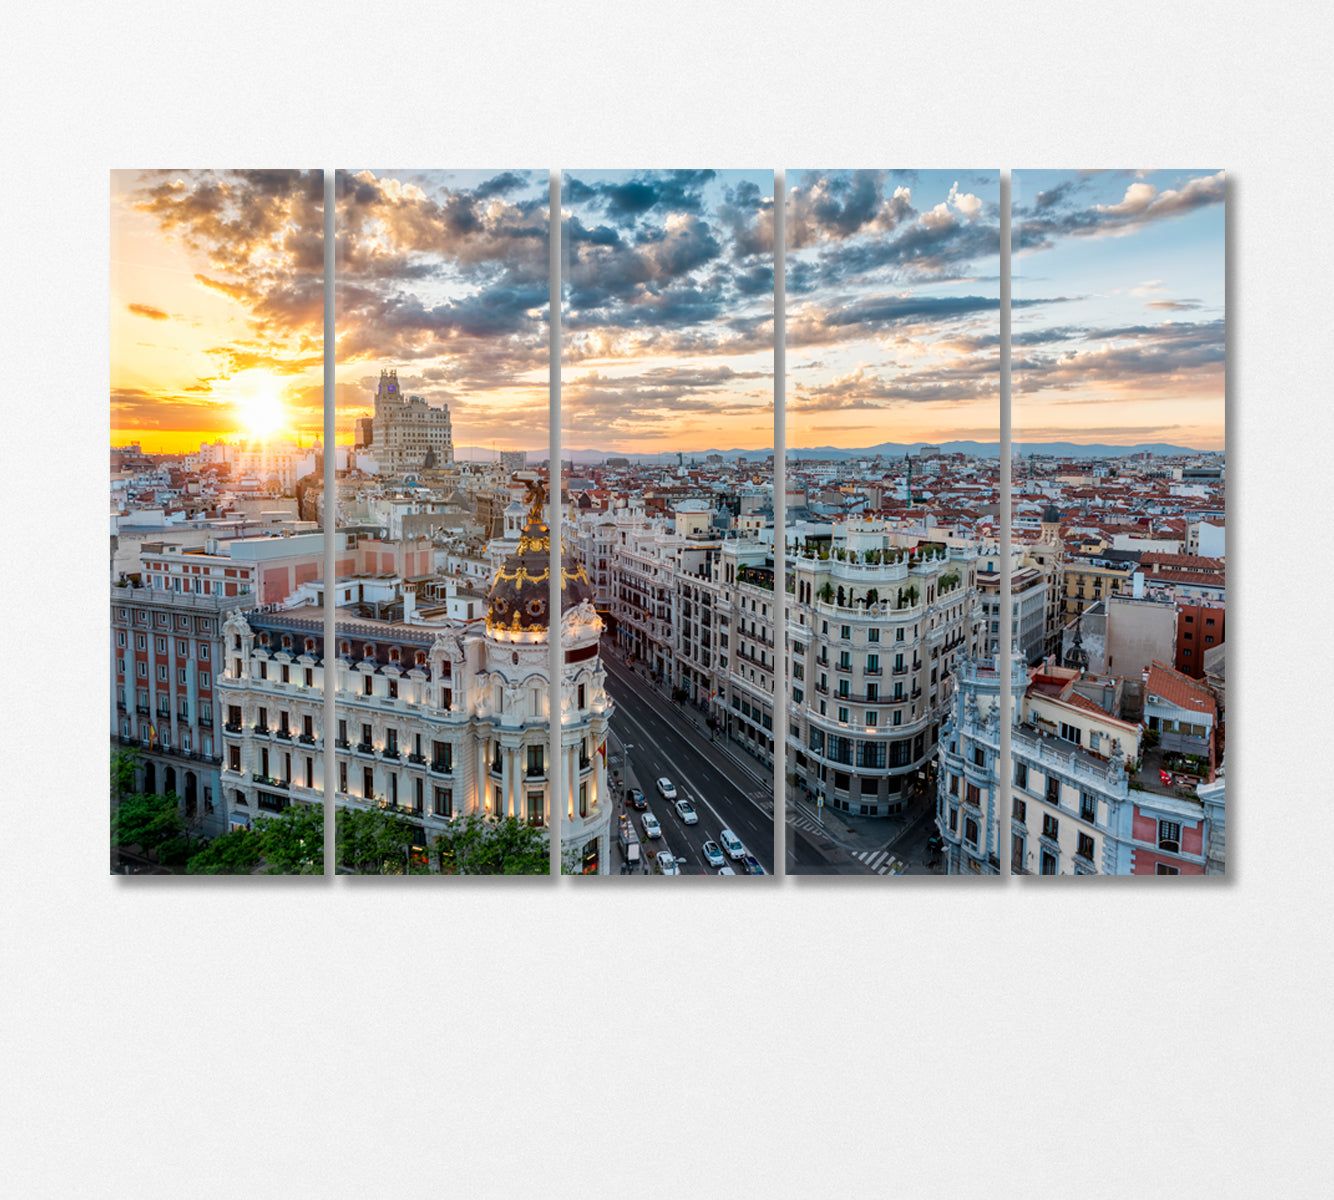 Madrid at Dusk Spain Canvas Print-Canvas Print-CetArt-5 Panels-36x24 inches-CetArt